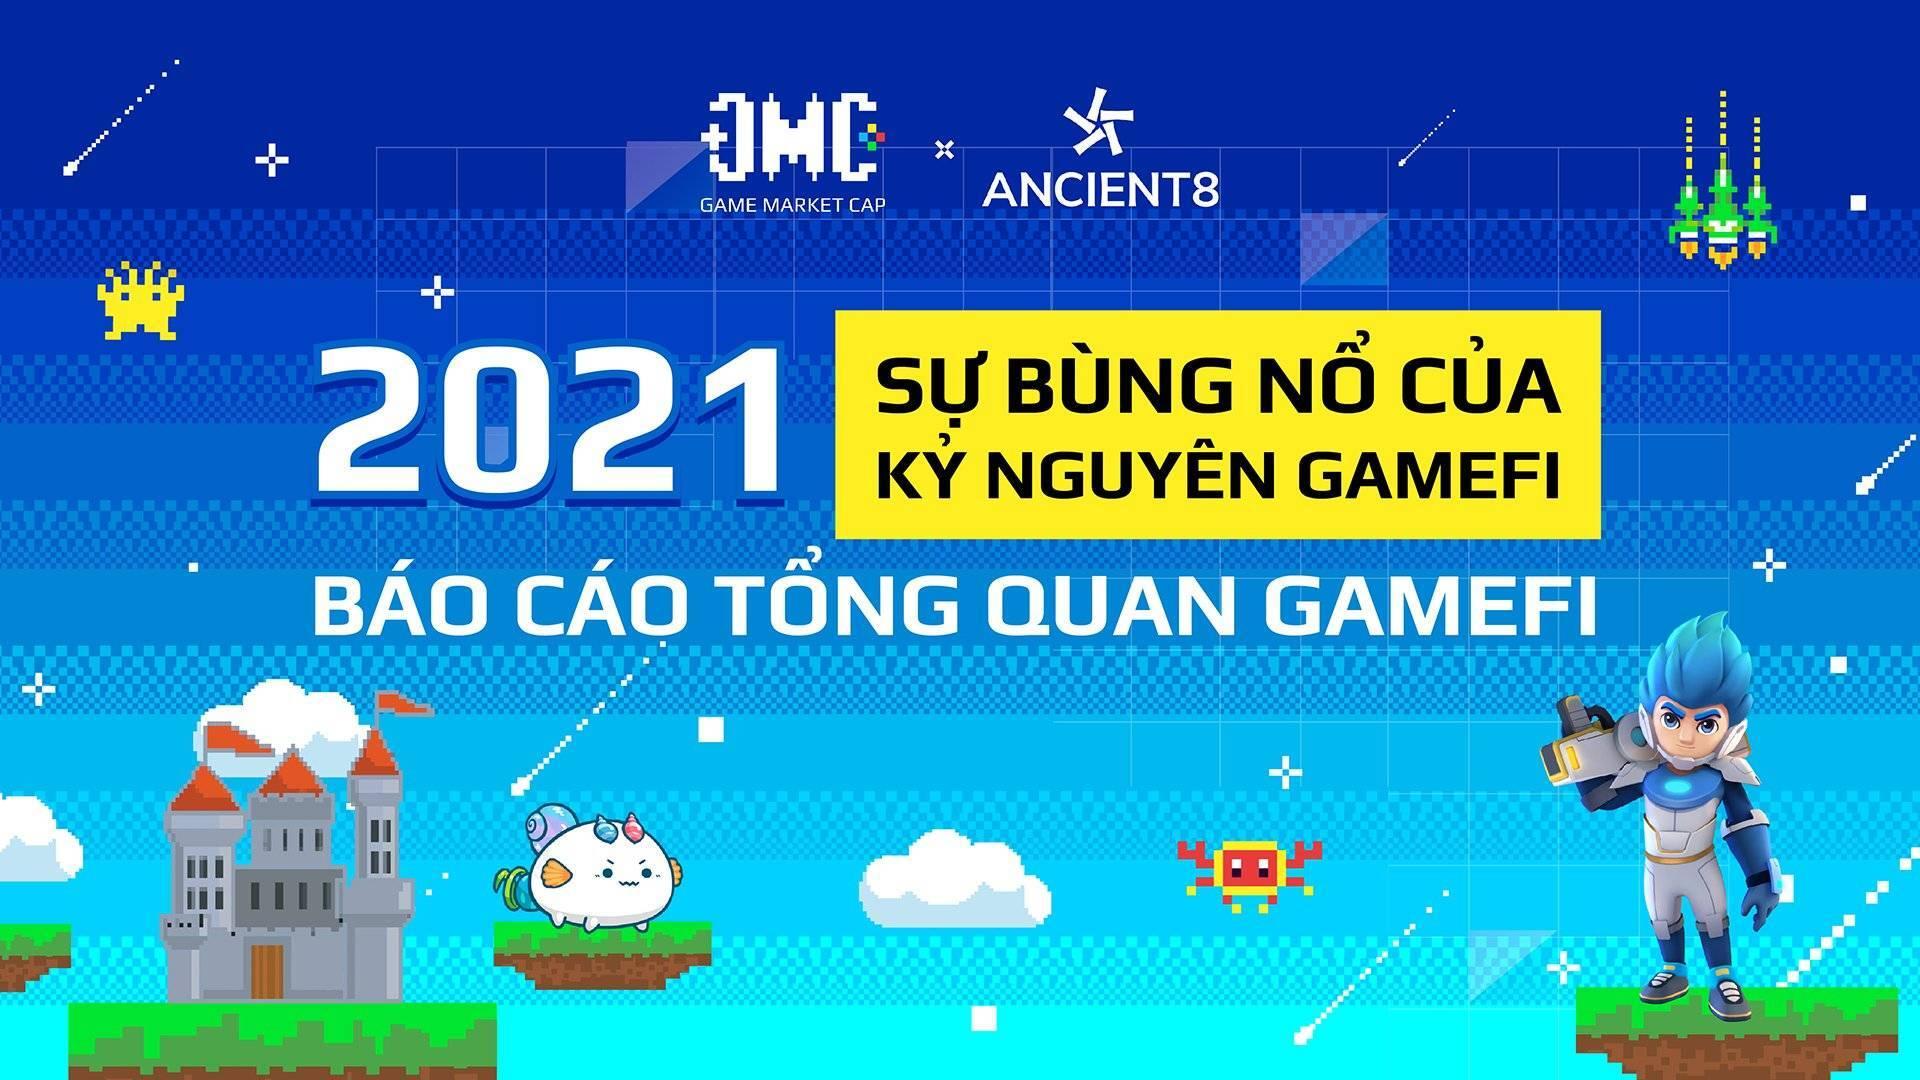 bao-cao-tong-quan-gamefi-nam-2021-gamemarketcap-x-ancient8